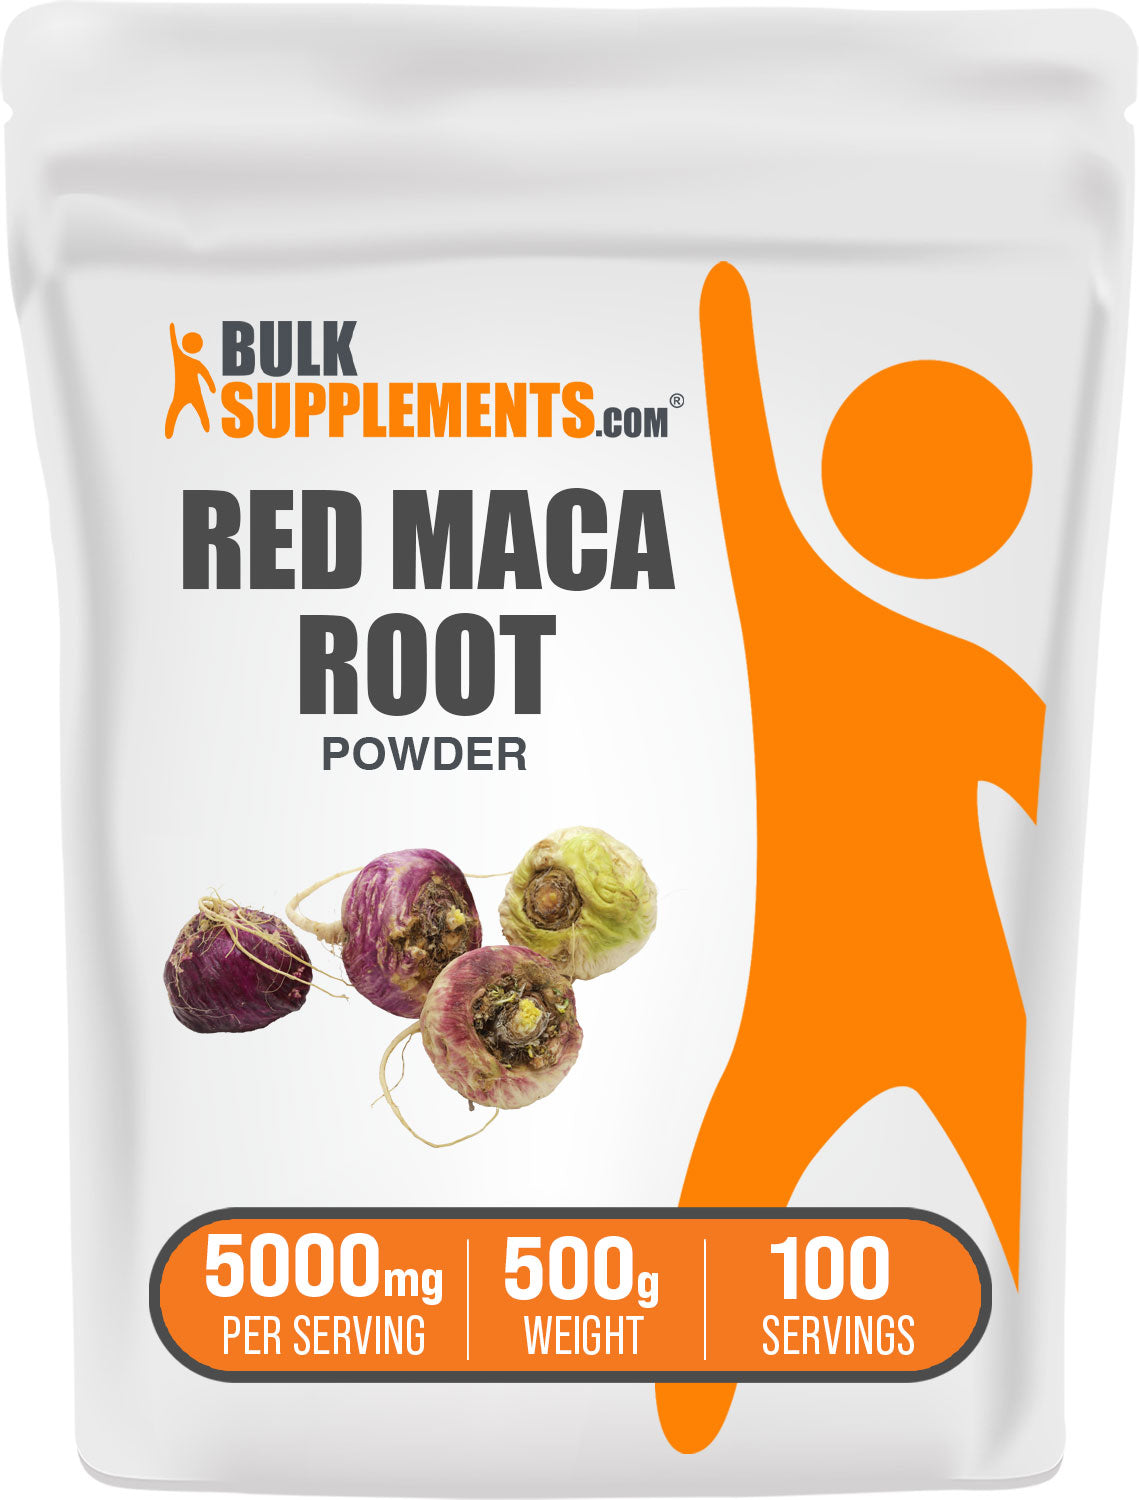 BulkSupplements.com Red Maca Powder 500g Bag